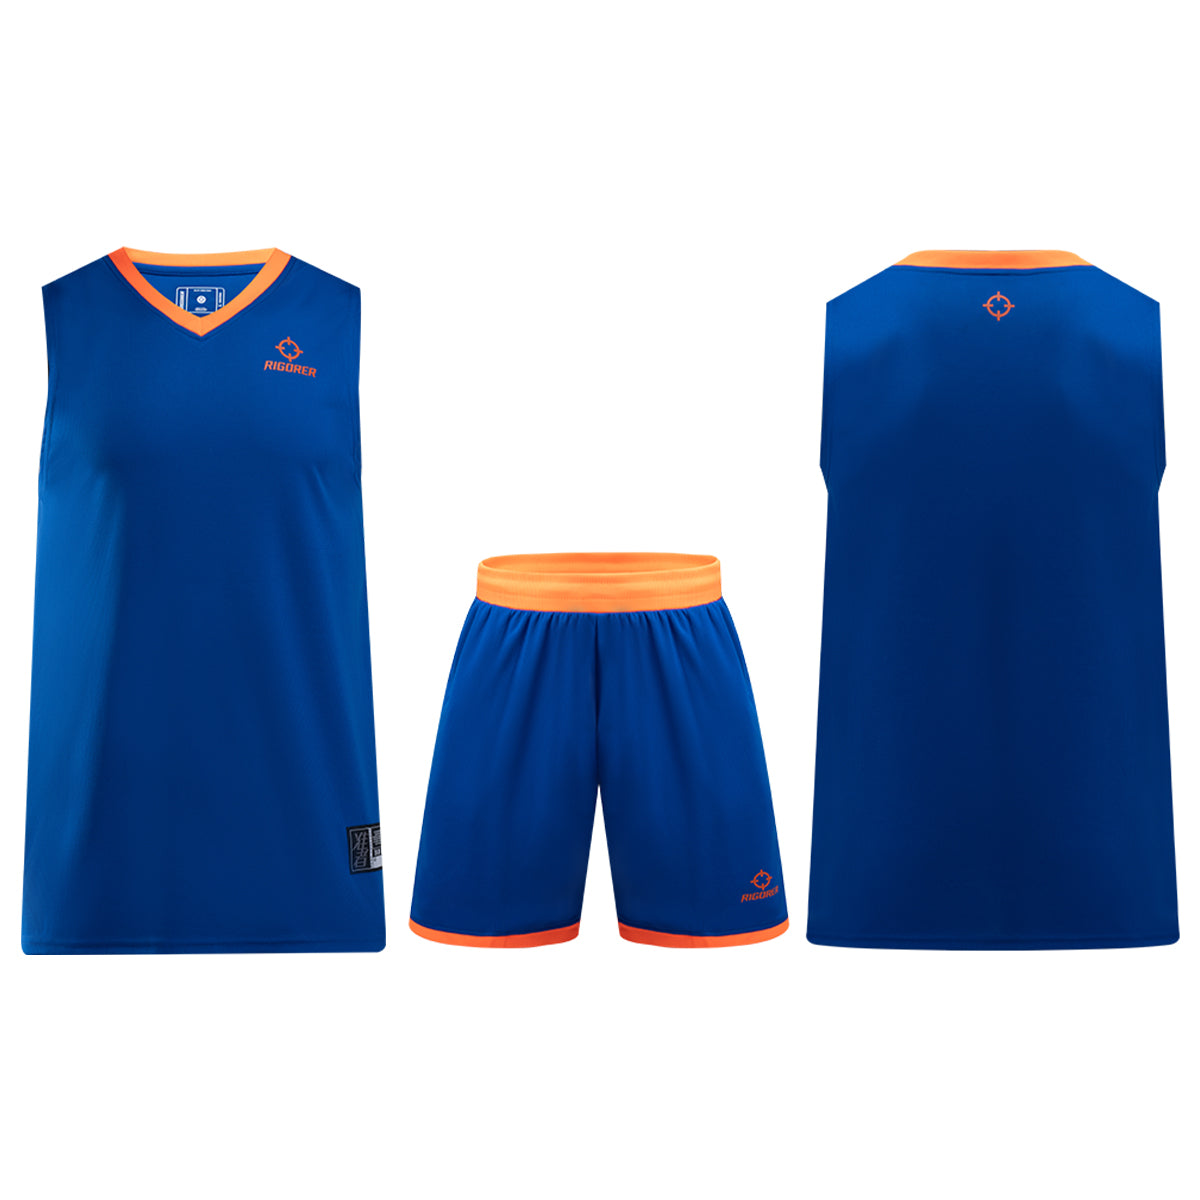 blue and orange basketball jersey